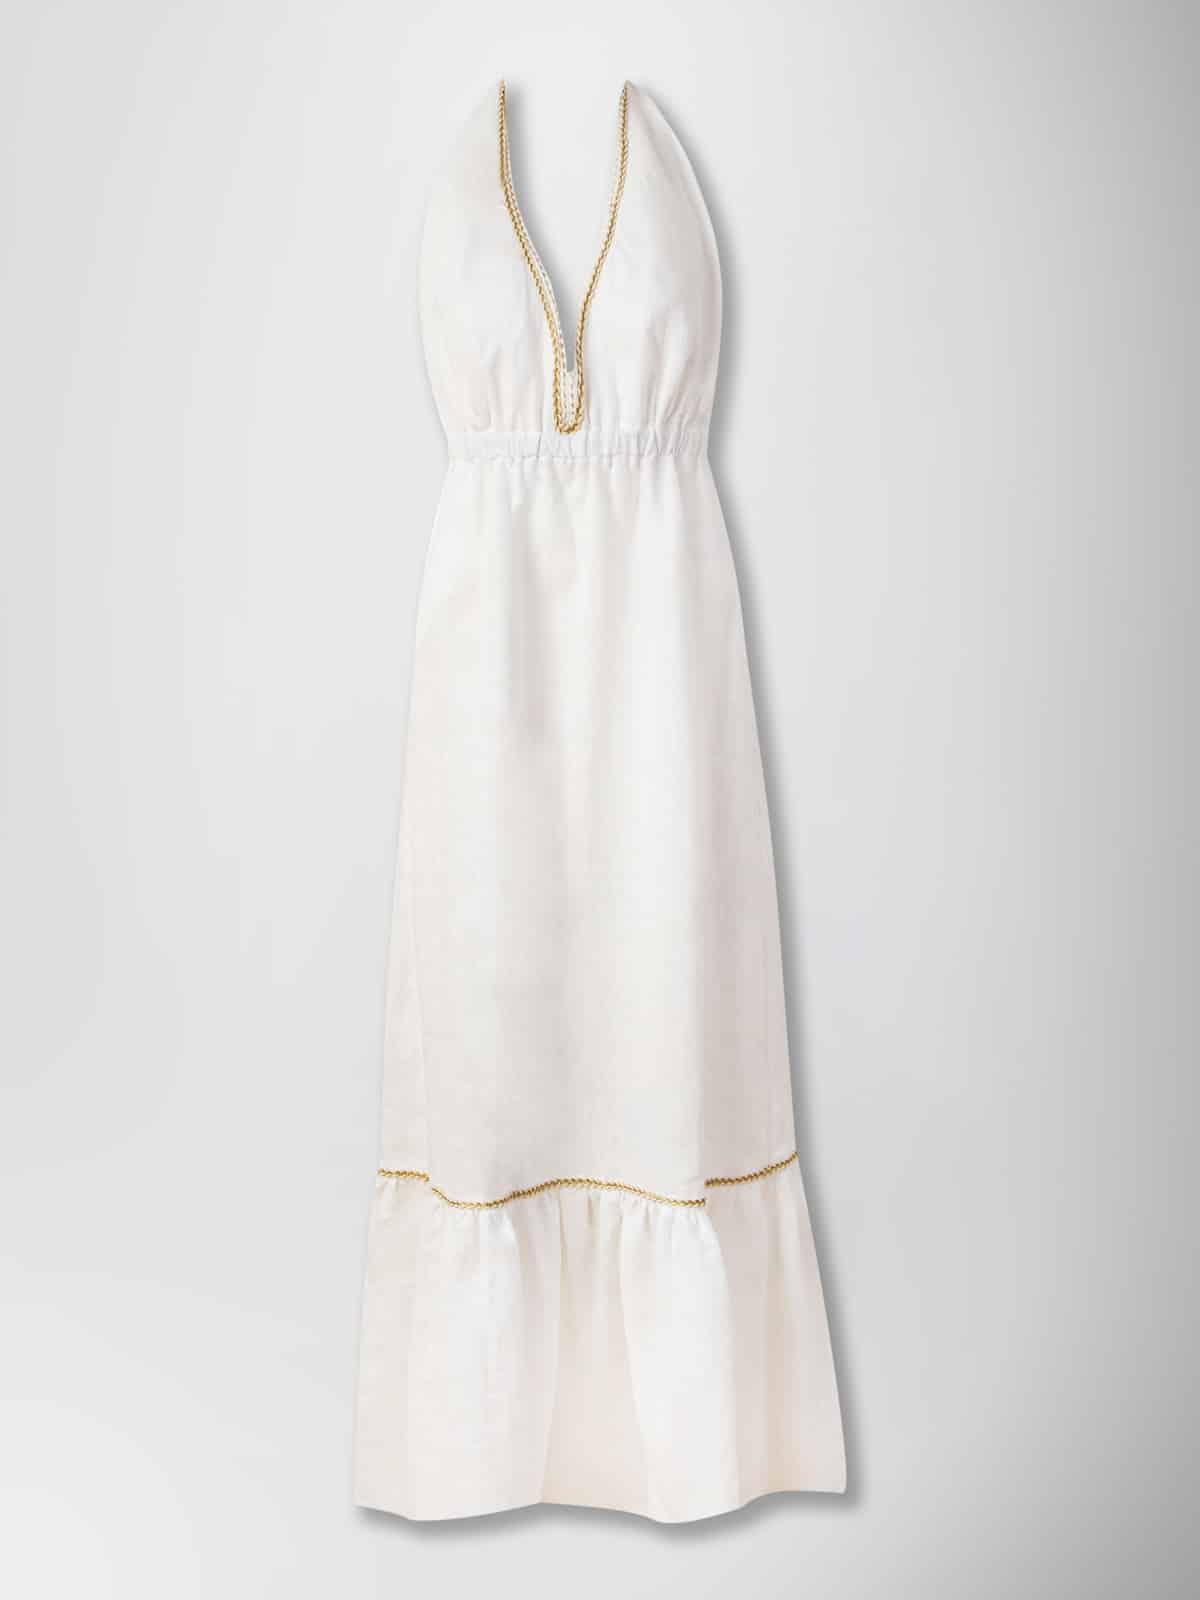 DRESS "ASAPHIS" WHITE